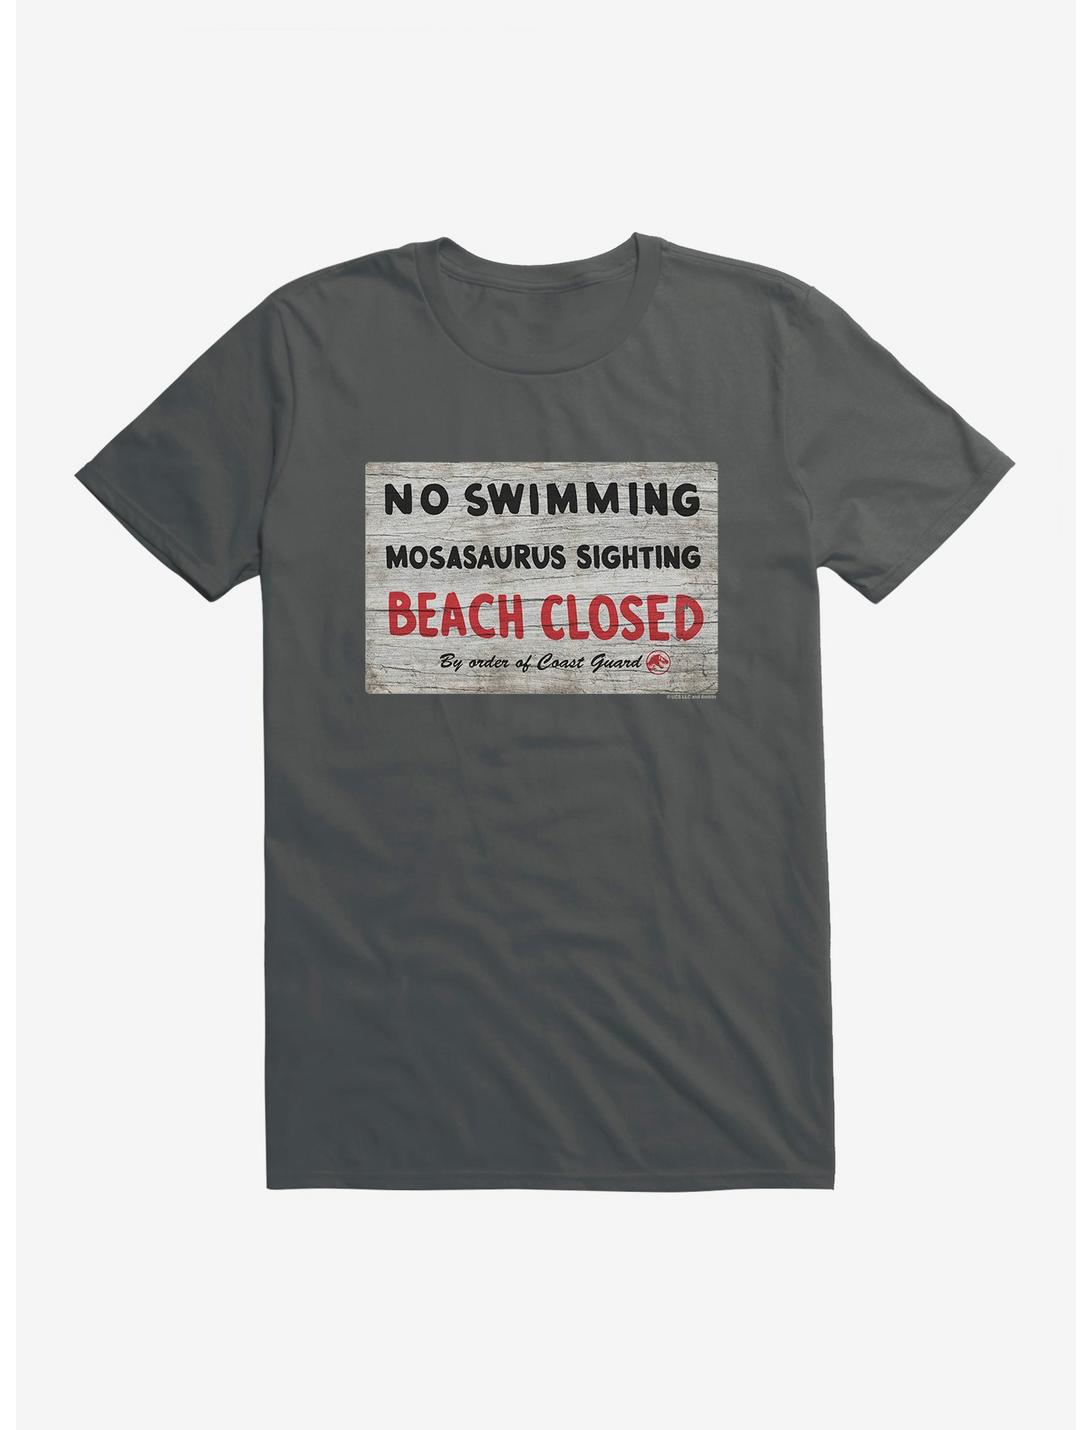 Jurassic World Dominion No Swimming  T-Shirt, CHARCOAL, hi-res